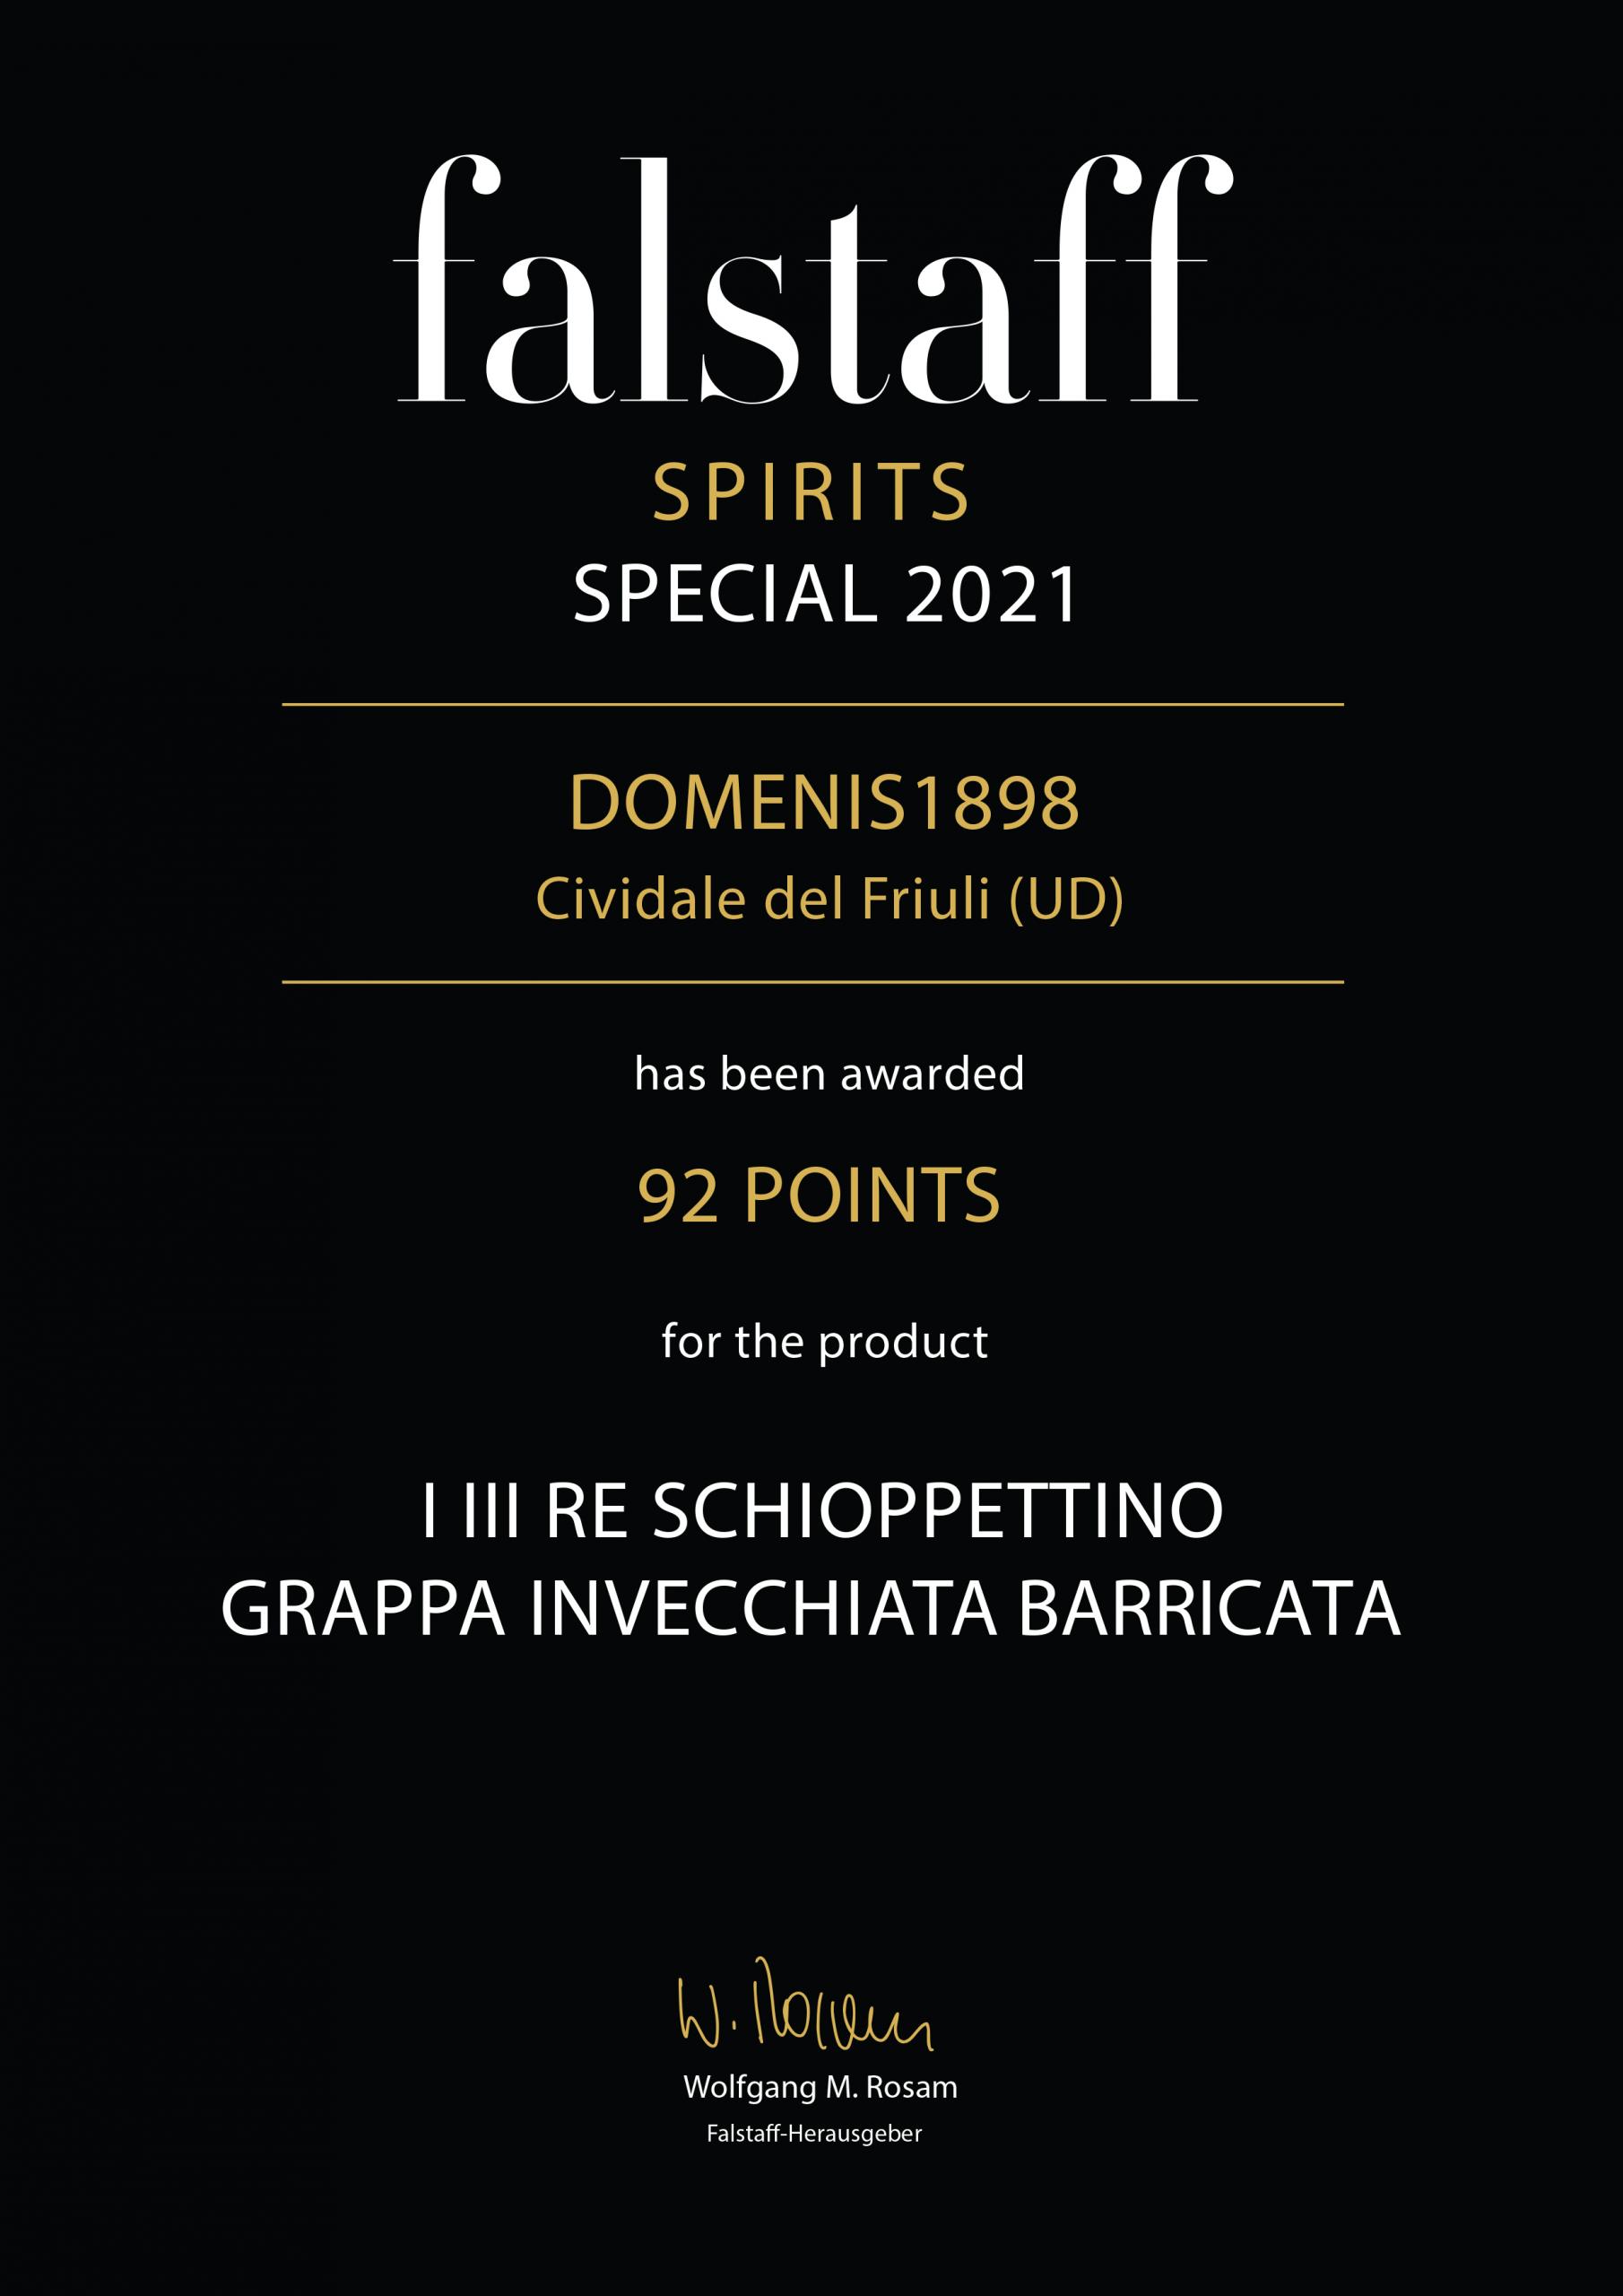 Falstaff Spirits Special 2021 – I III Re Schioppettino